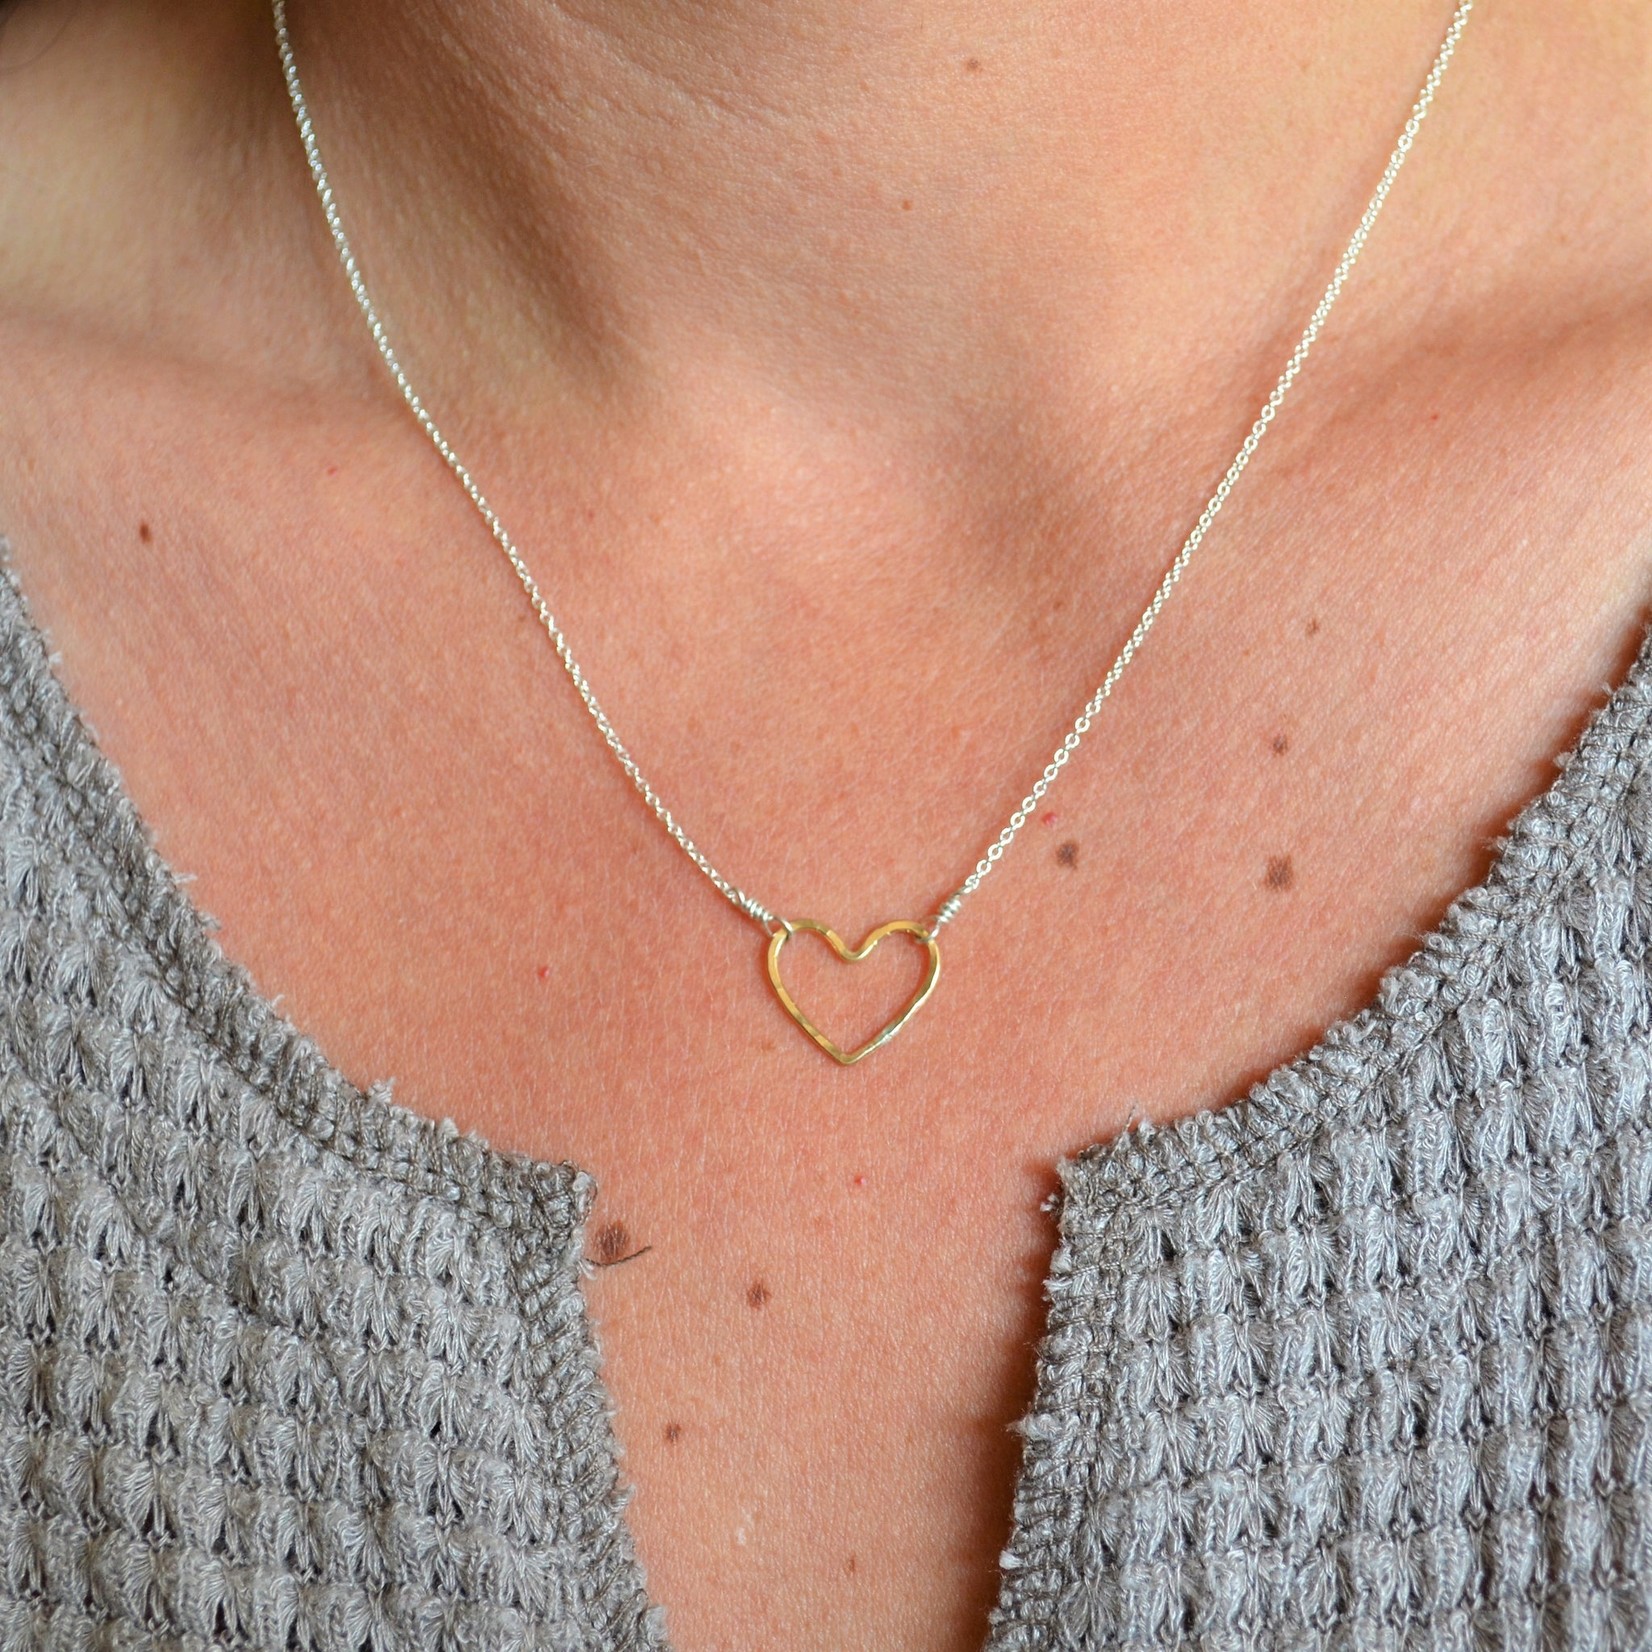 Tamacino Plum - heart necklace